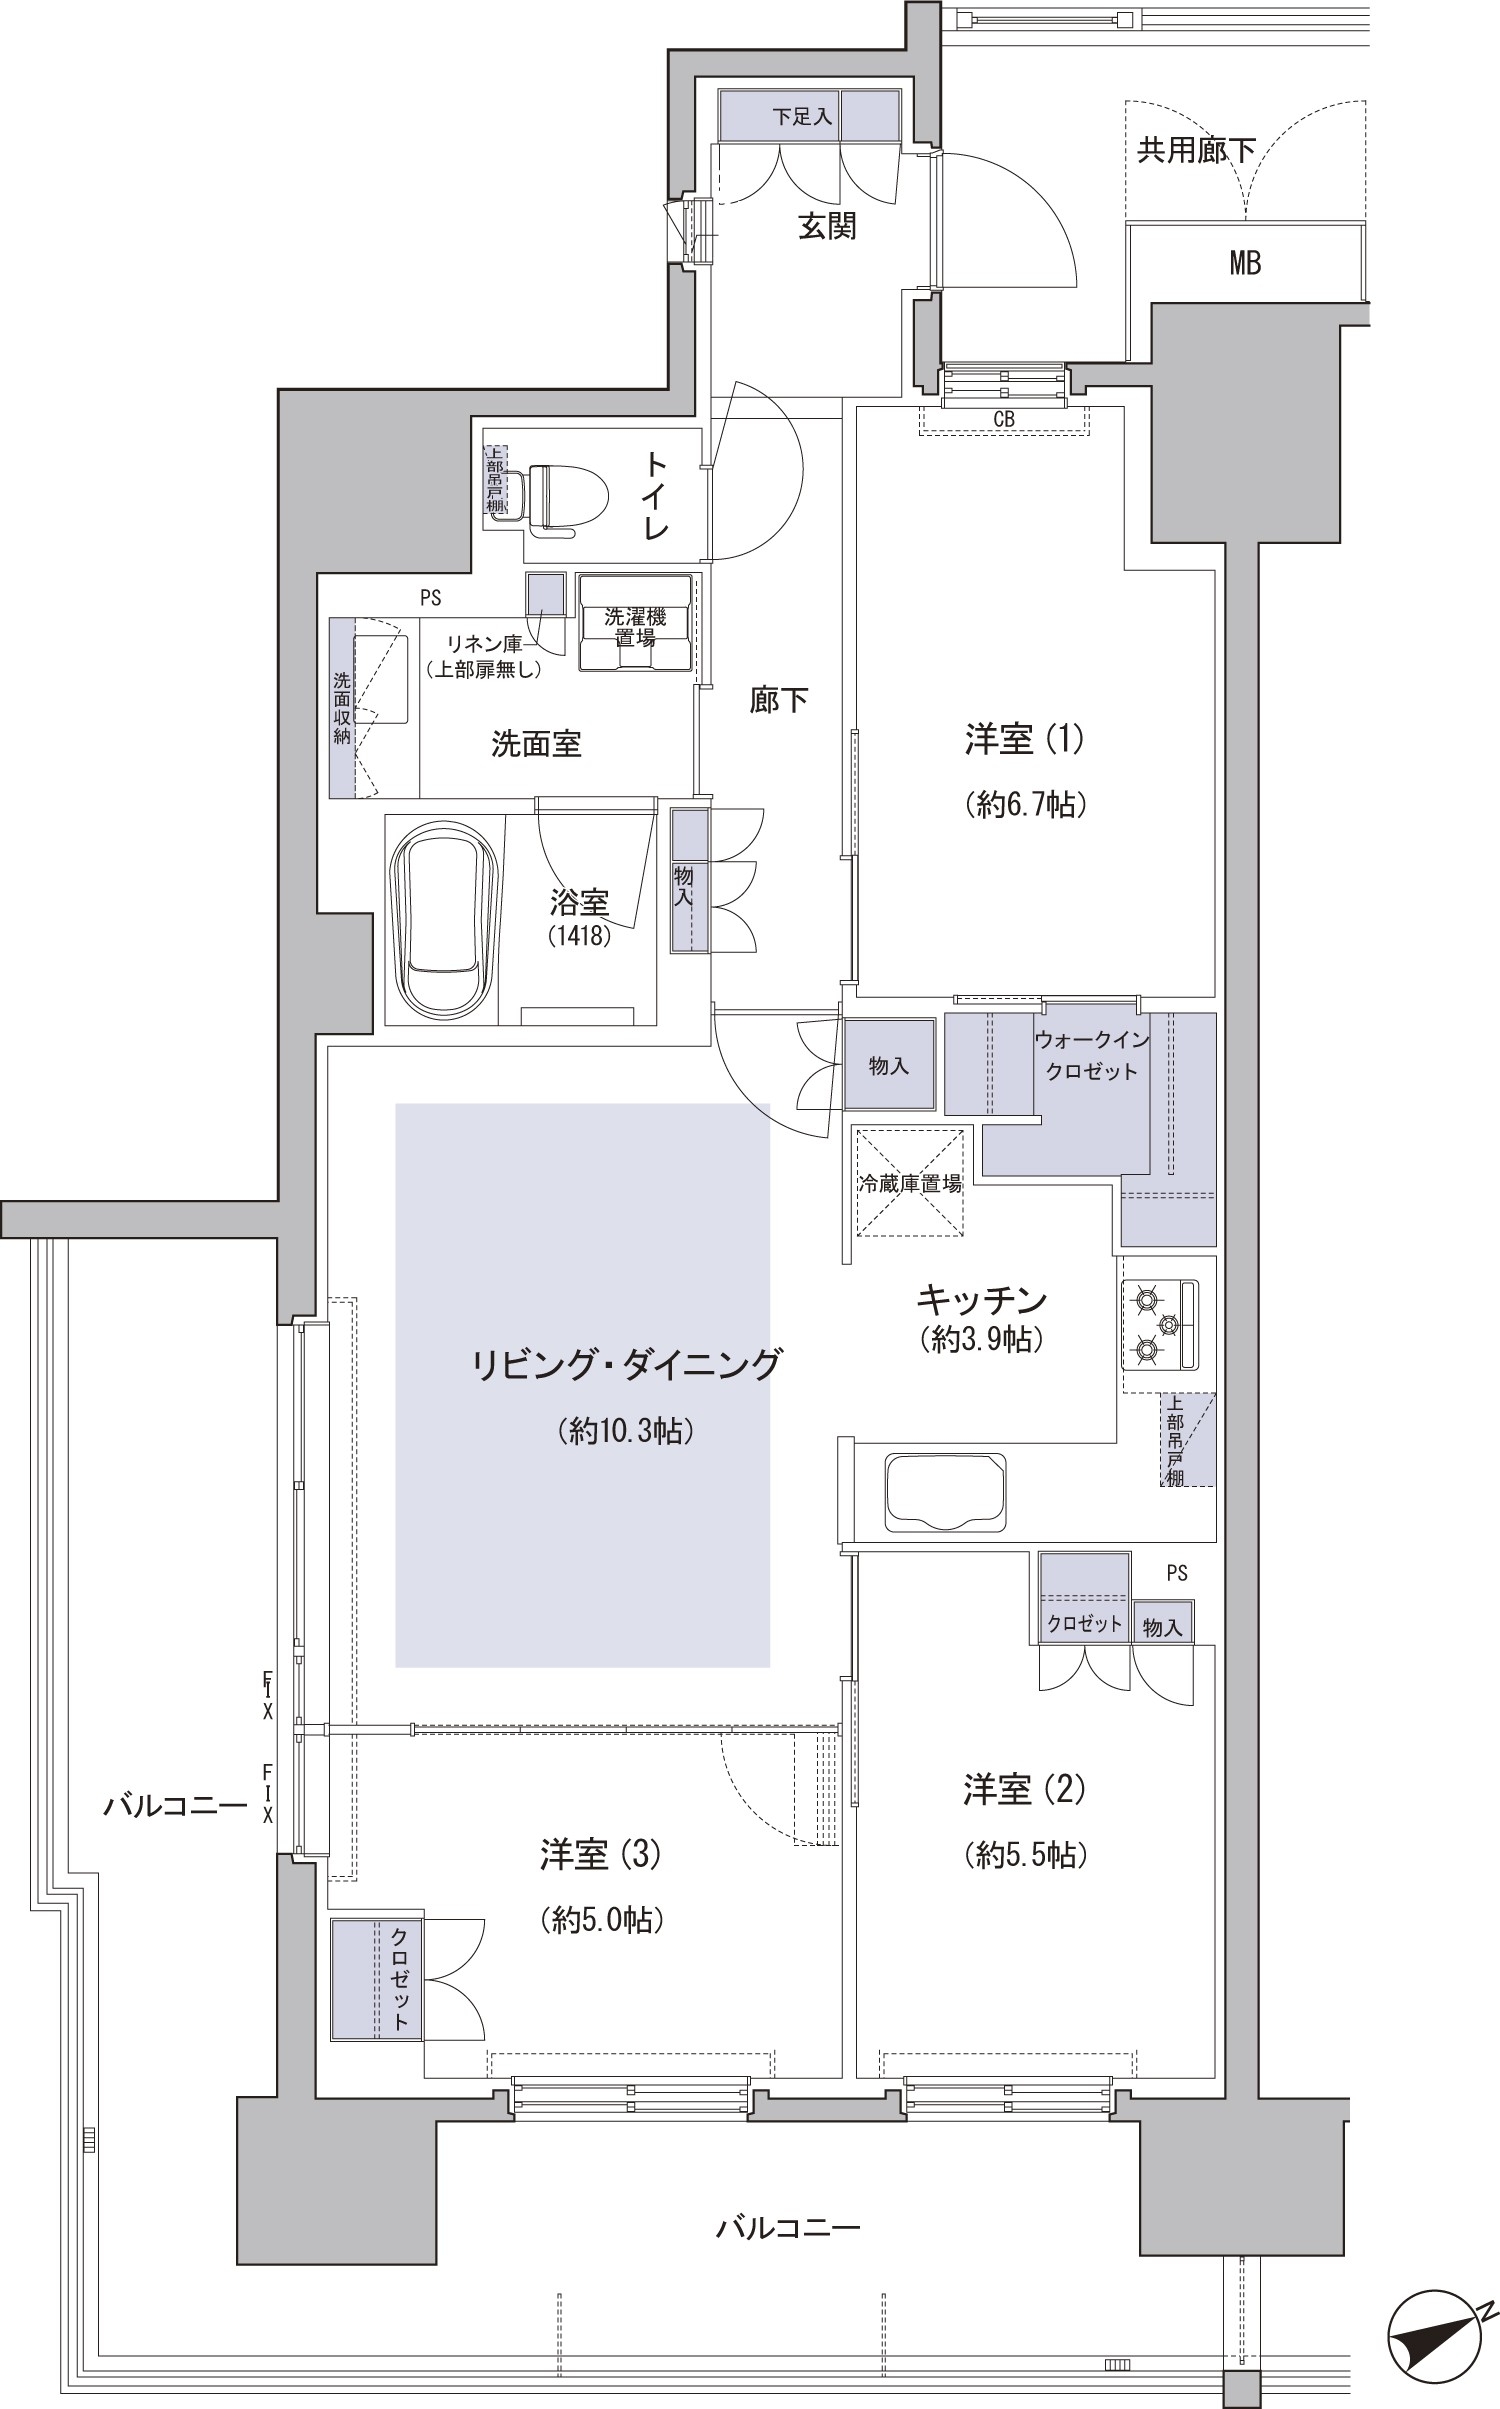 D type 3LDK + WIC Occupied area / 74.64 sq m  Balcony area / 23.70 sq m   ※ WIC = walk-in closet